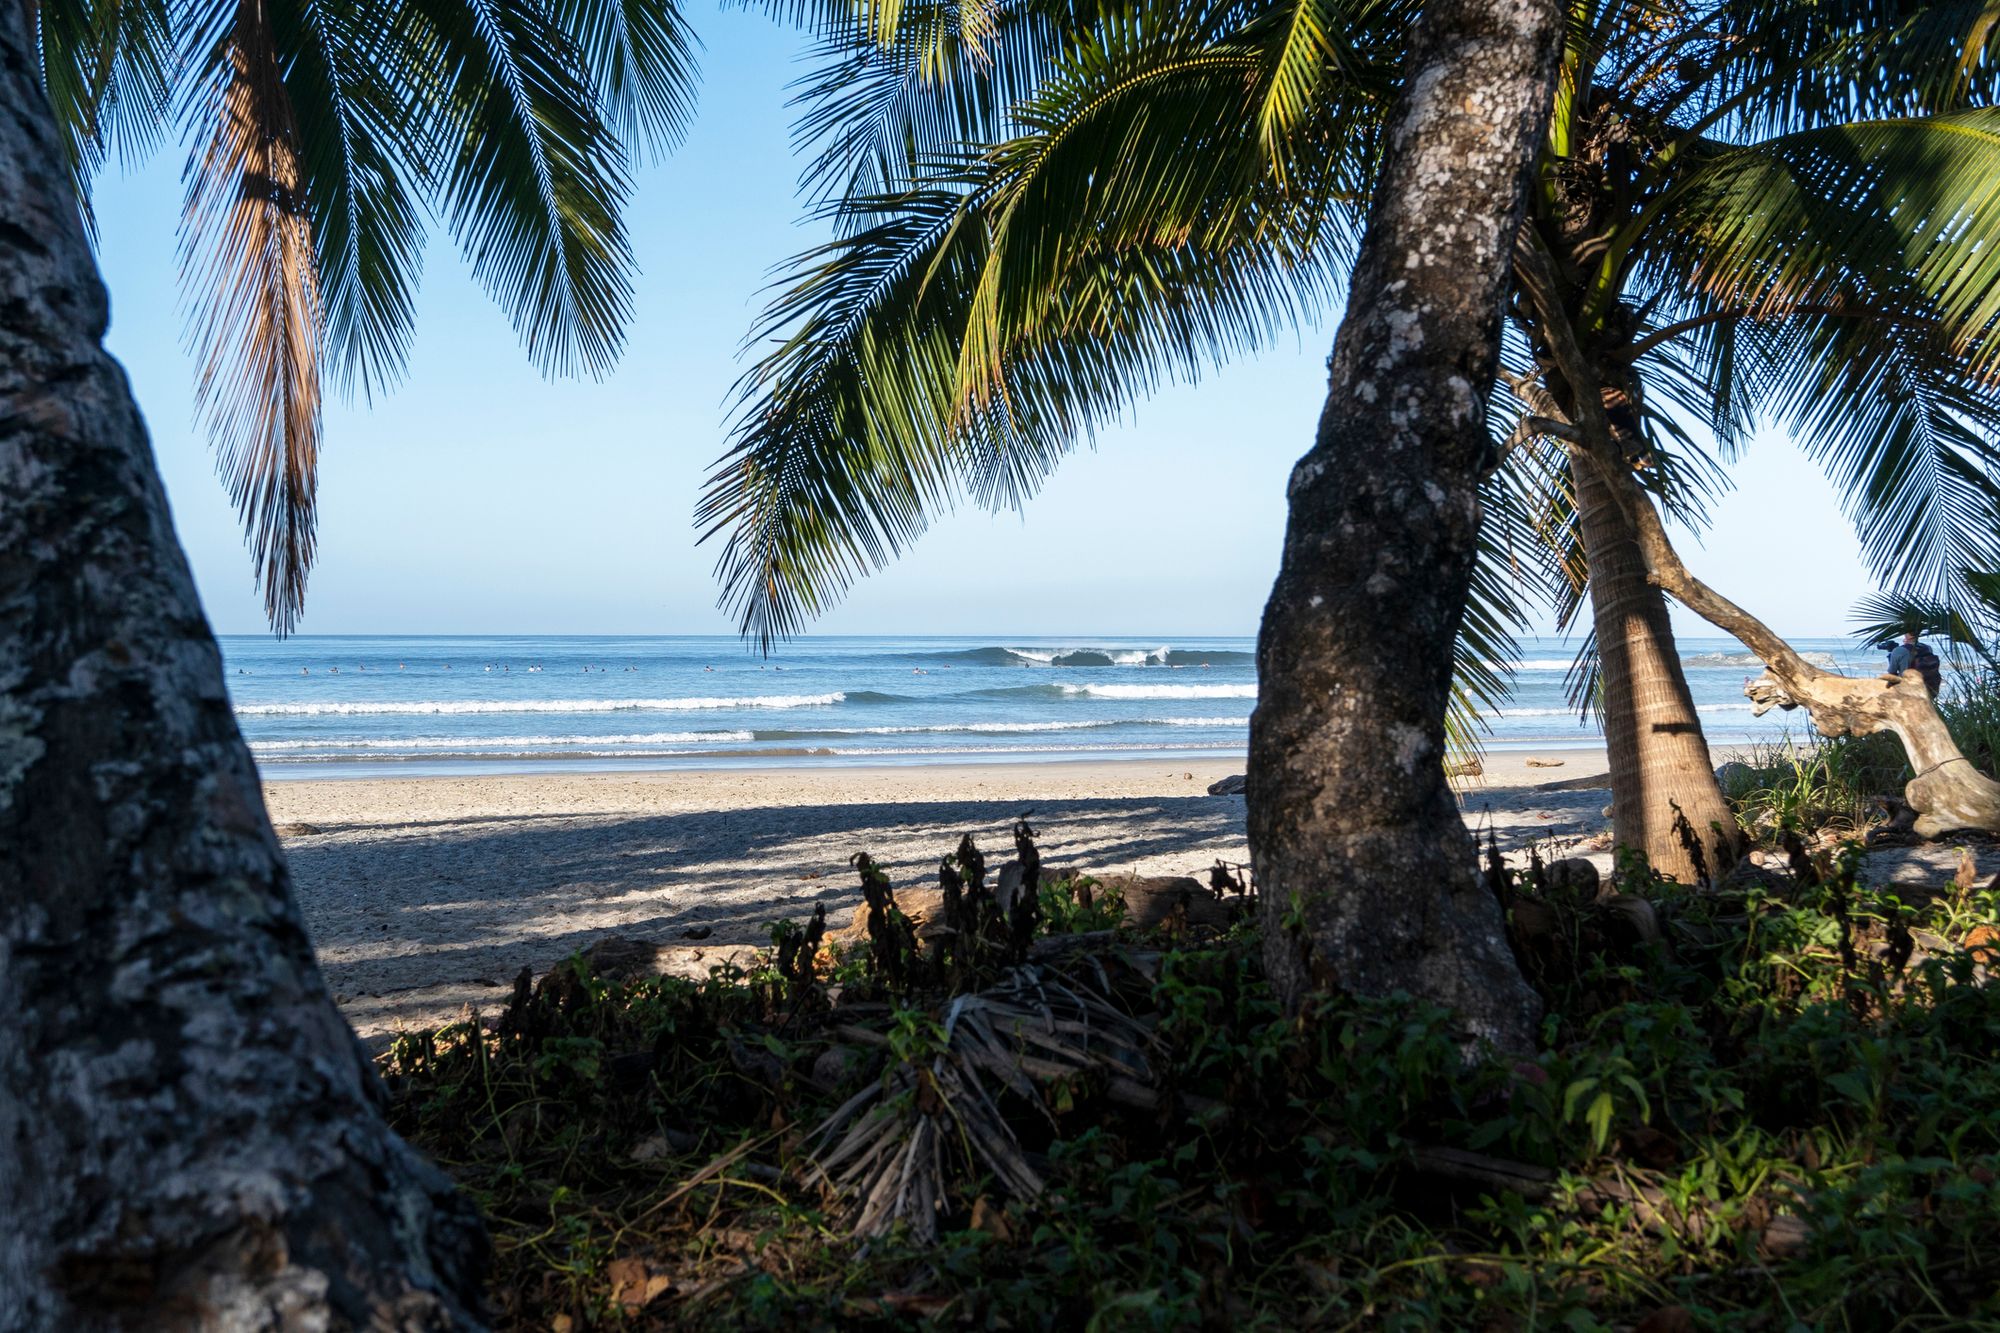 Looking at an a-frame peak through the palm trees at Santa Teresa, Costa Rica